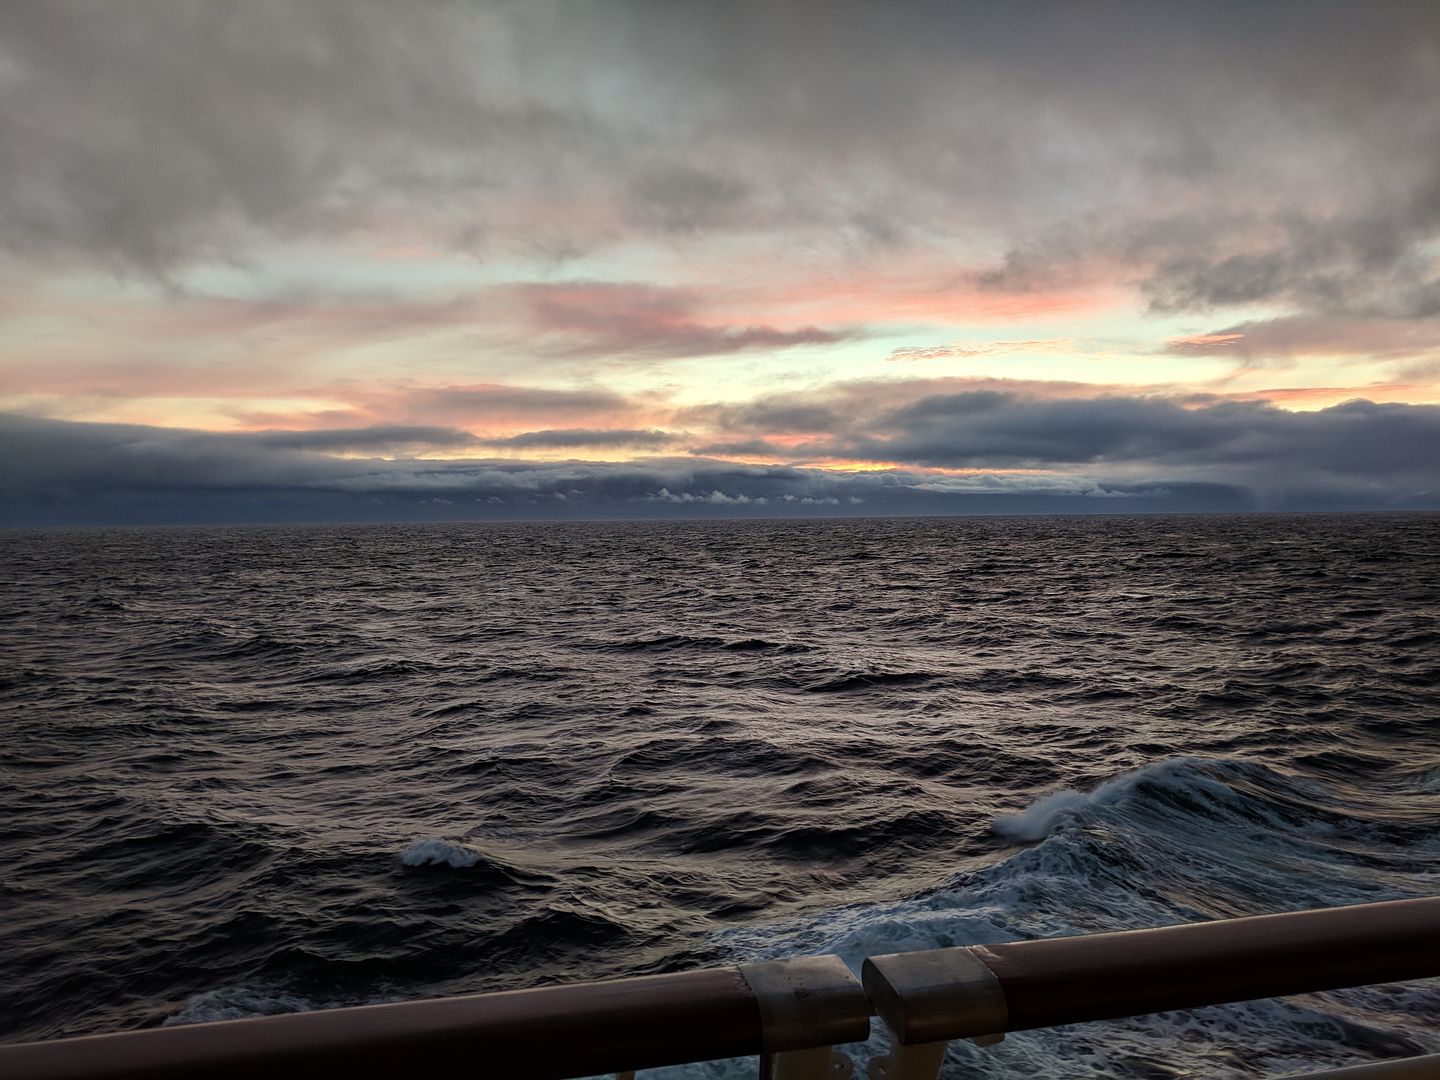 Norwegian sea, probably